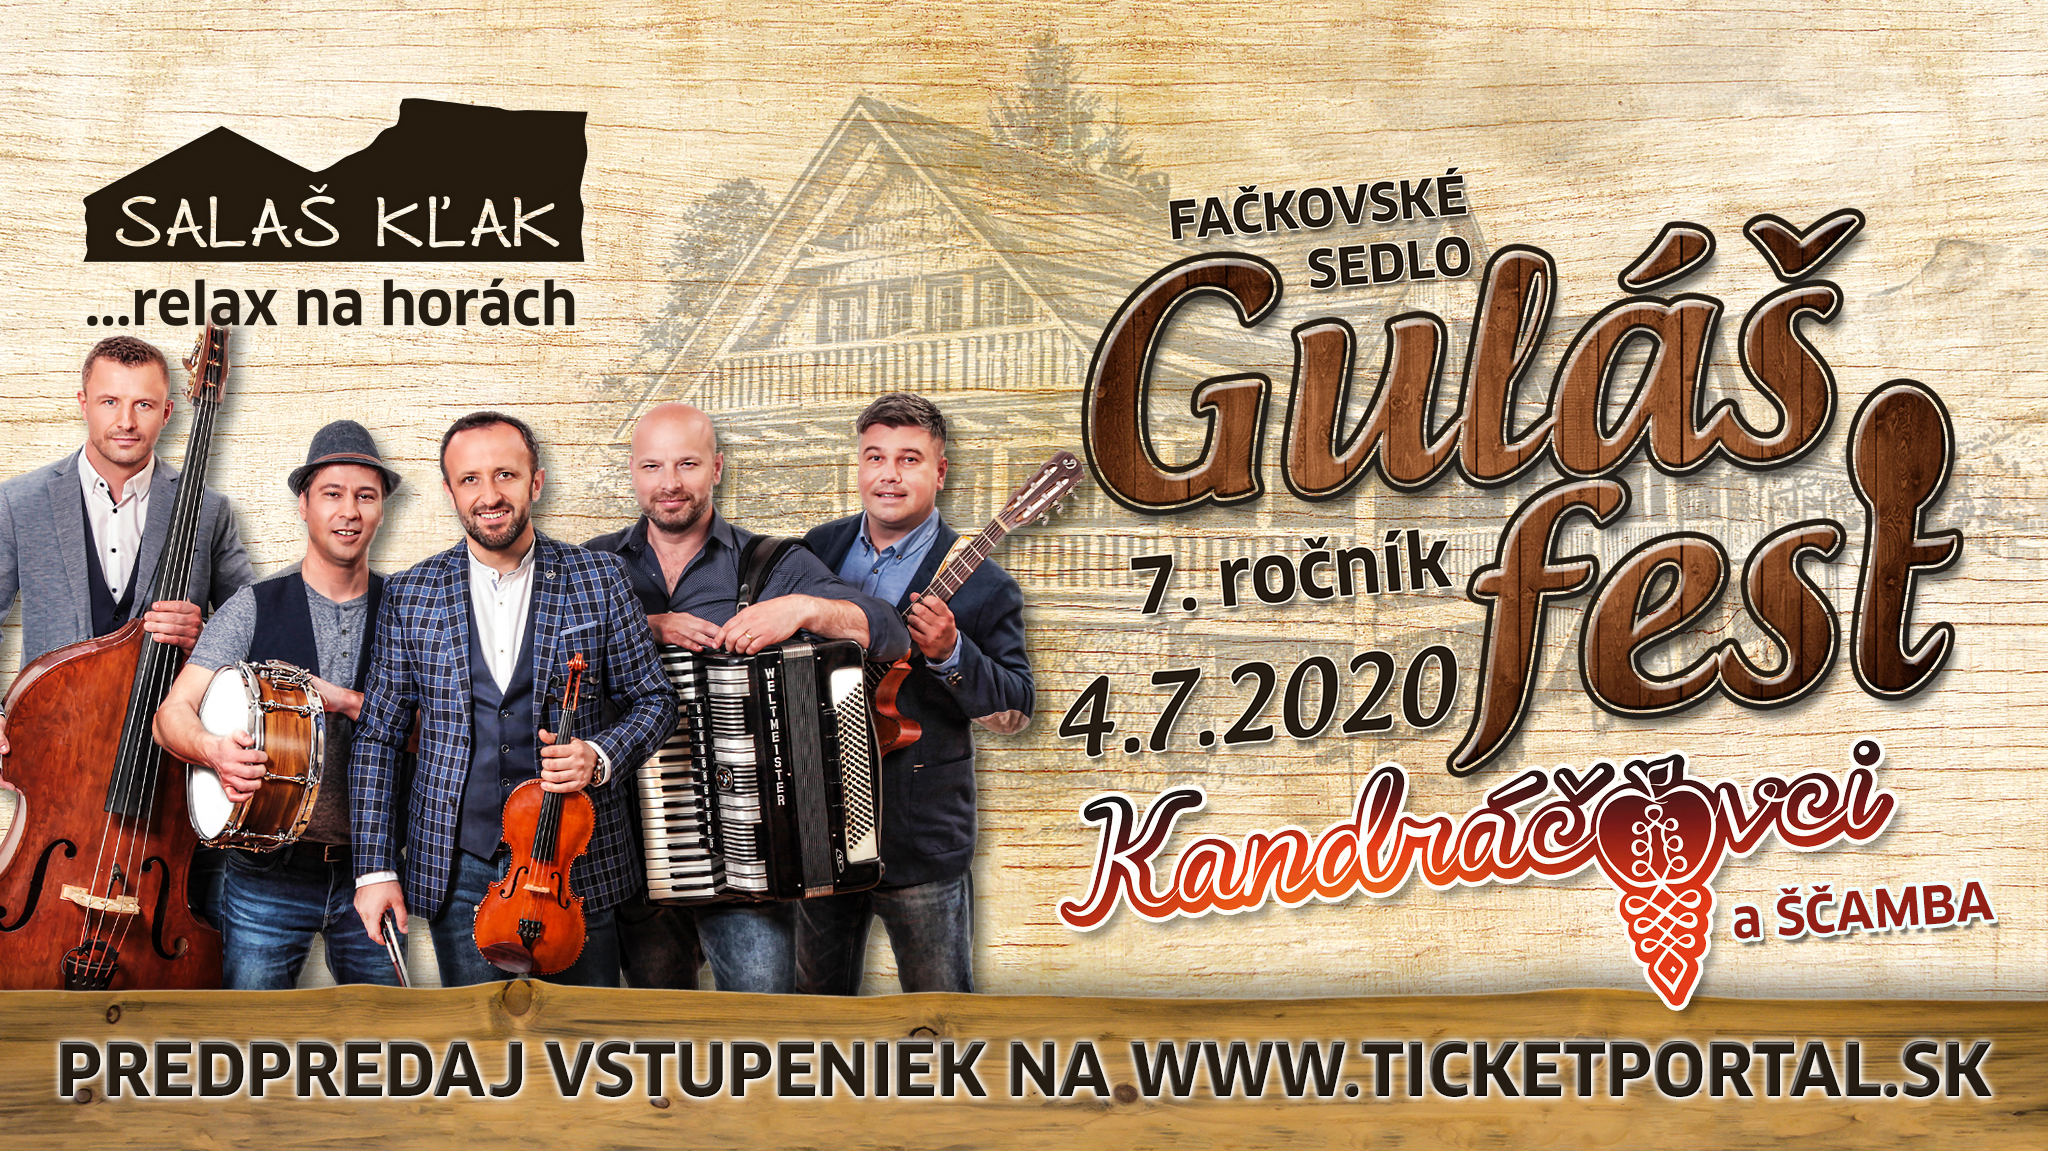 Gul fest na Fakovskom sedle 2020 Kano - 7.ronk